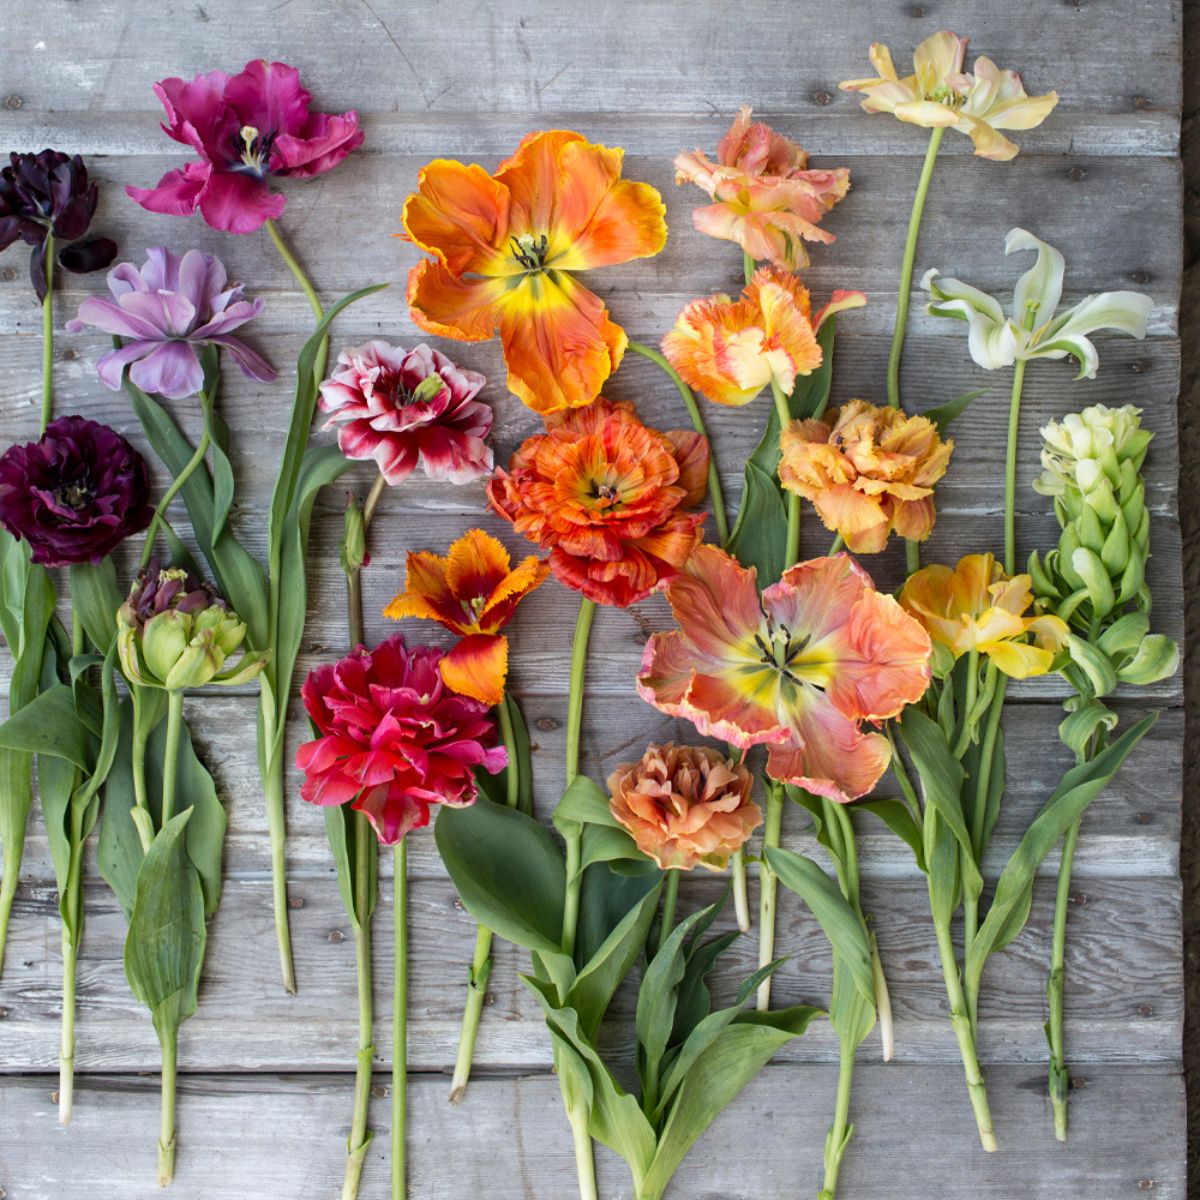 Floret Flower best flower Instagram accounts to follow in 2023